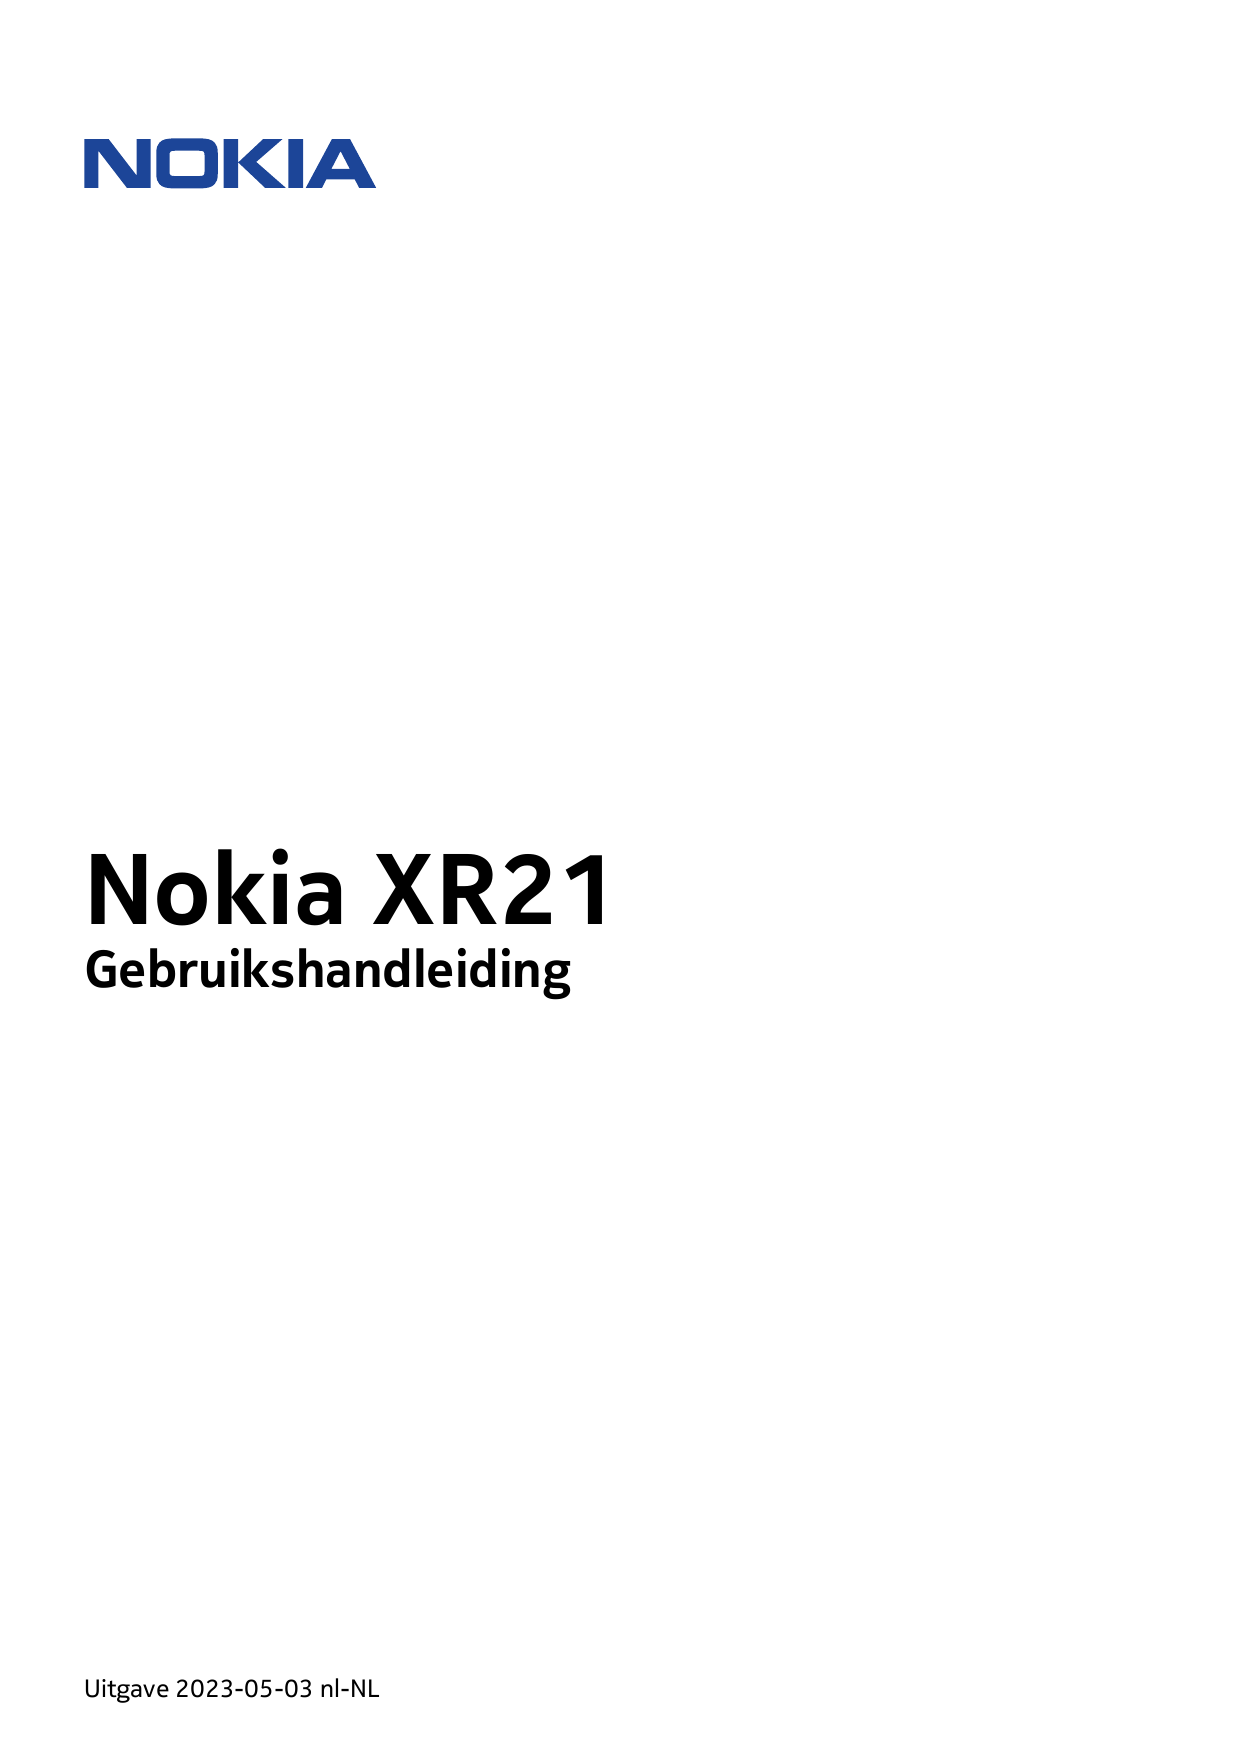 Nokia XR21GebruikshandleidingUitgave 2023-05-03 nl-NL